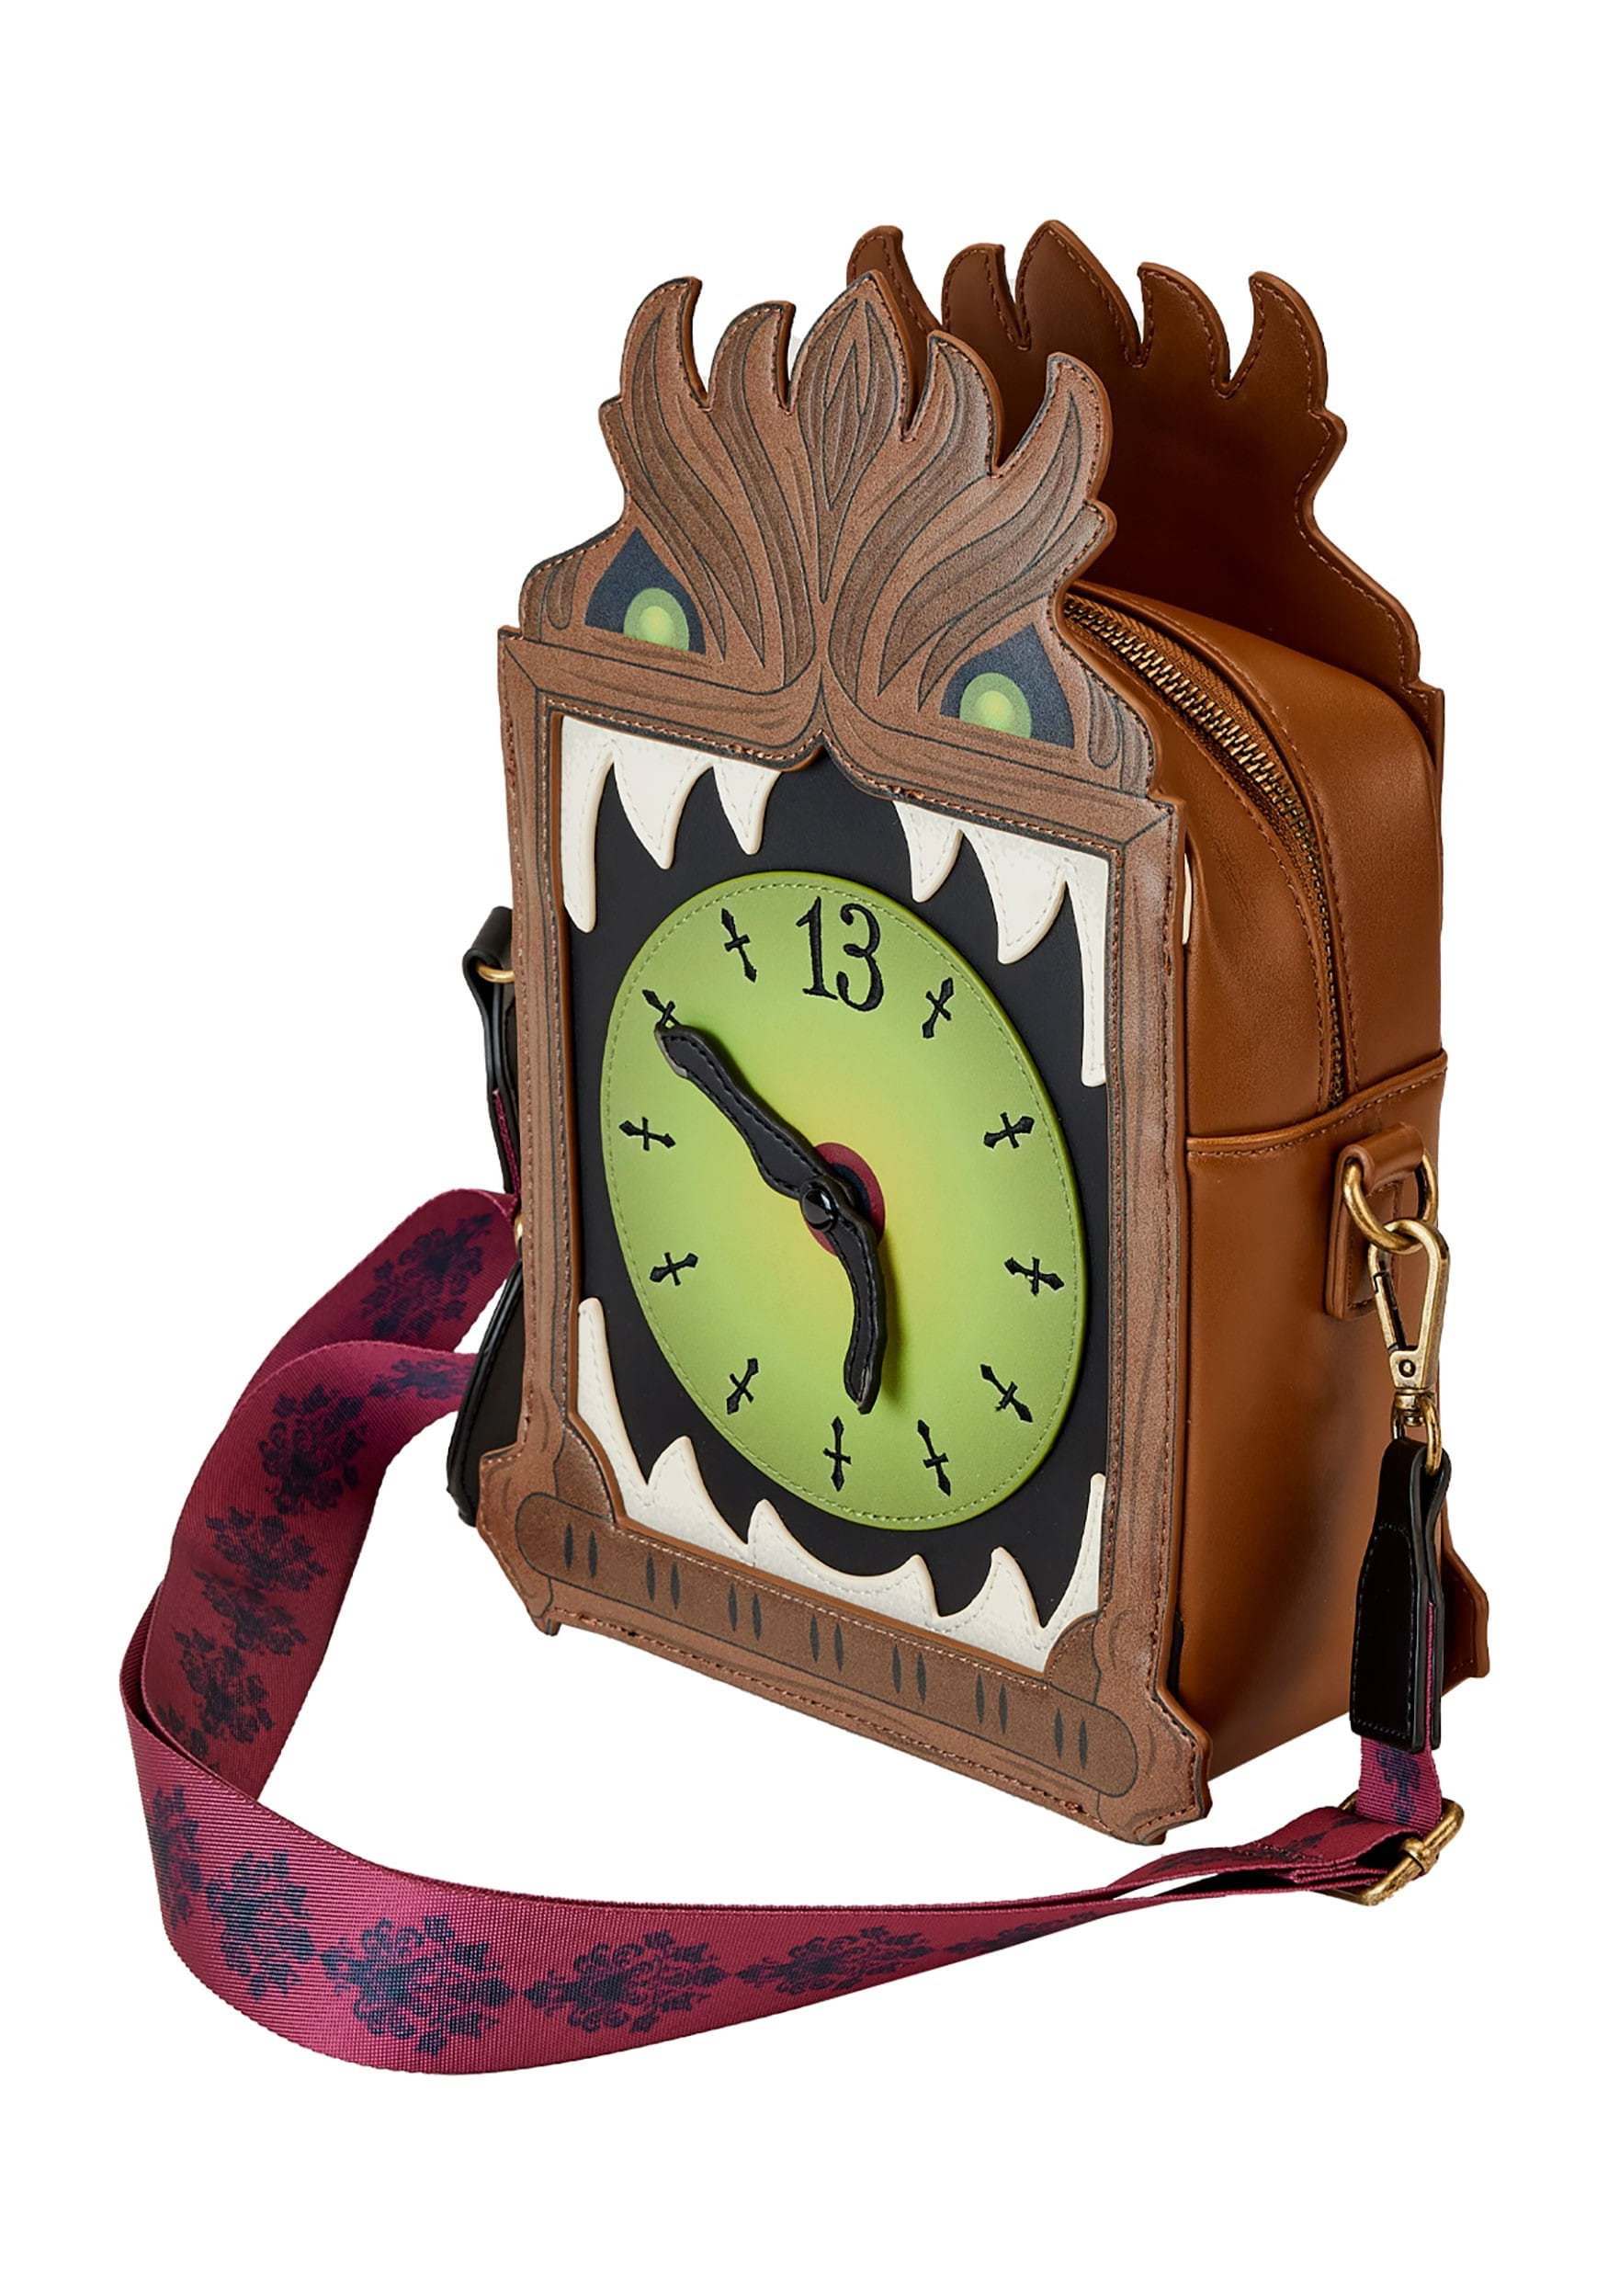 https://images.halloweencostumes.com/products/93870/2-1-290207/lf-disney-haunted-mansion-clock-crossbody-bag-alt-3.jpg